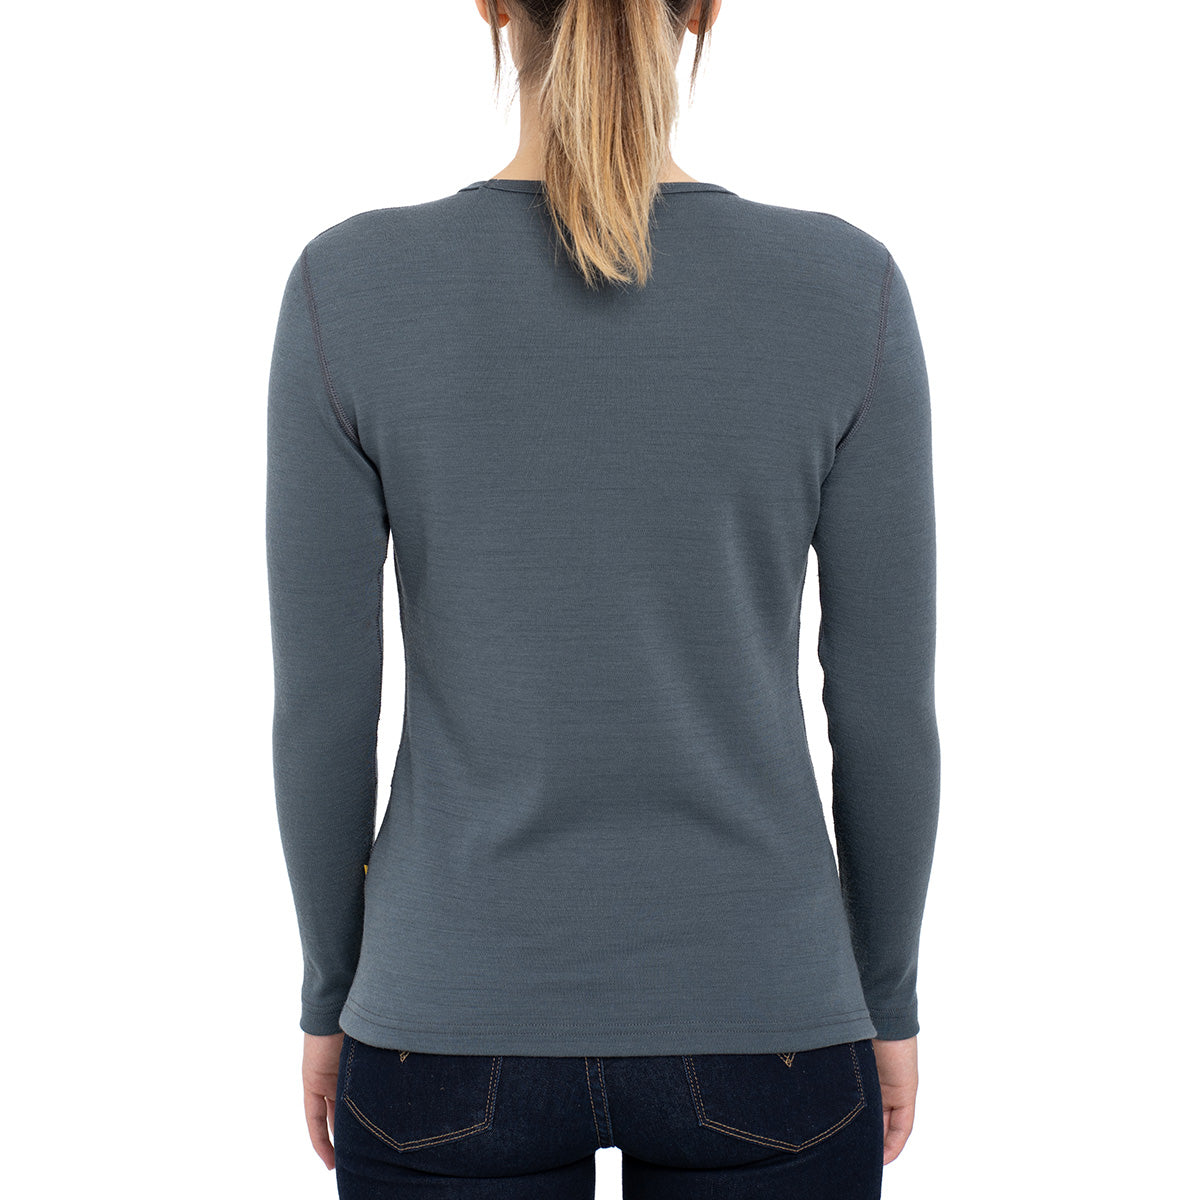 MENIQUE Long Sleeve Crew 100% Merino Wool Womens Shirt Perfect Grey